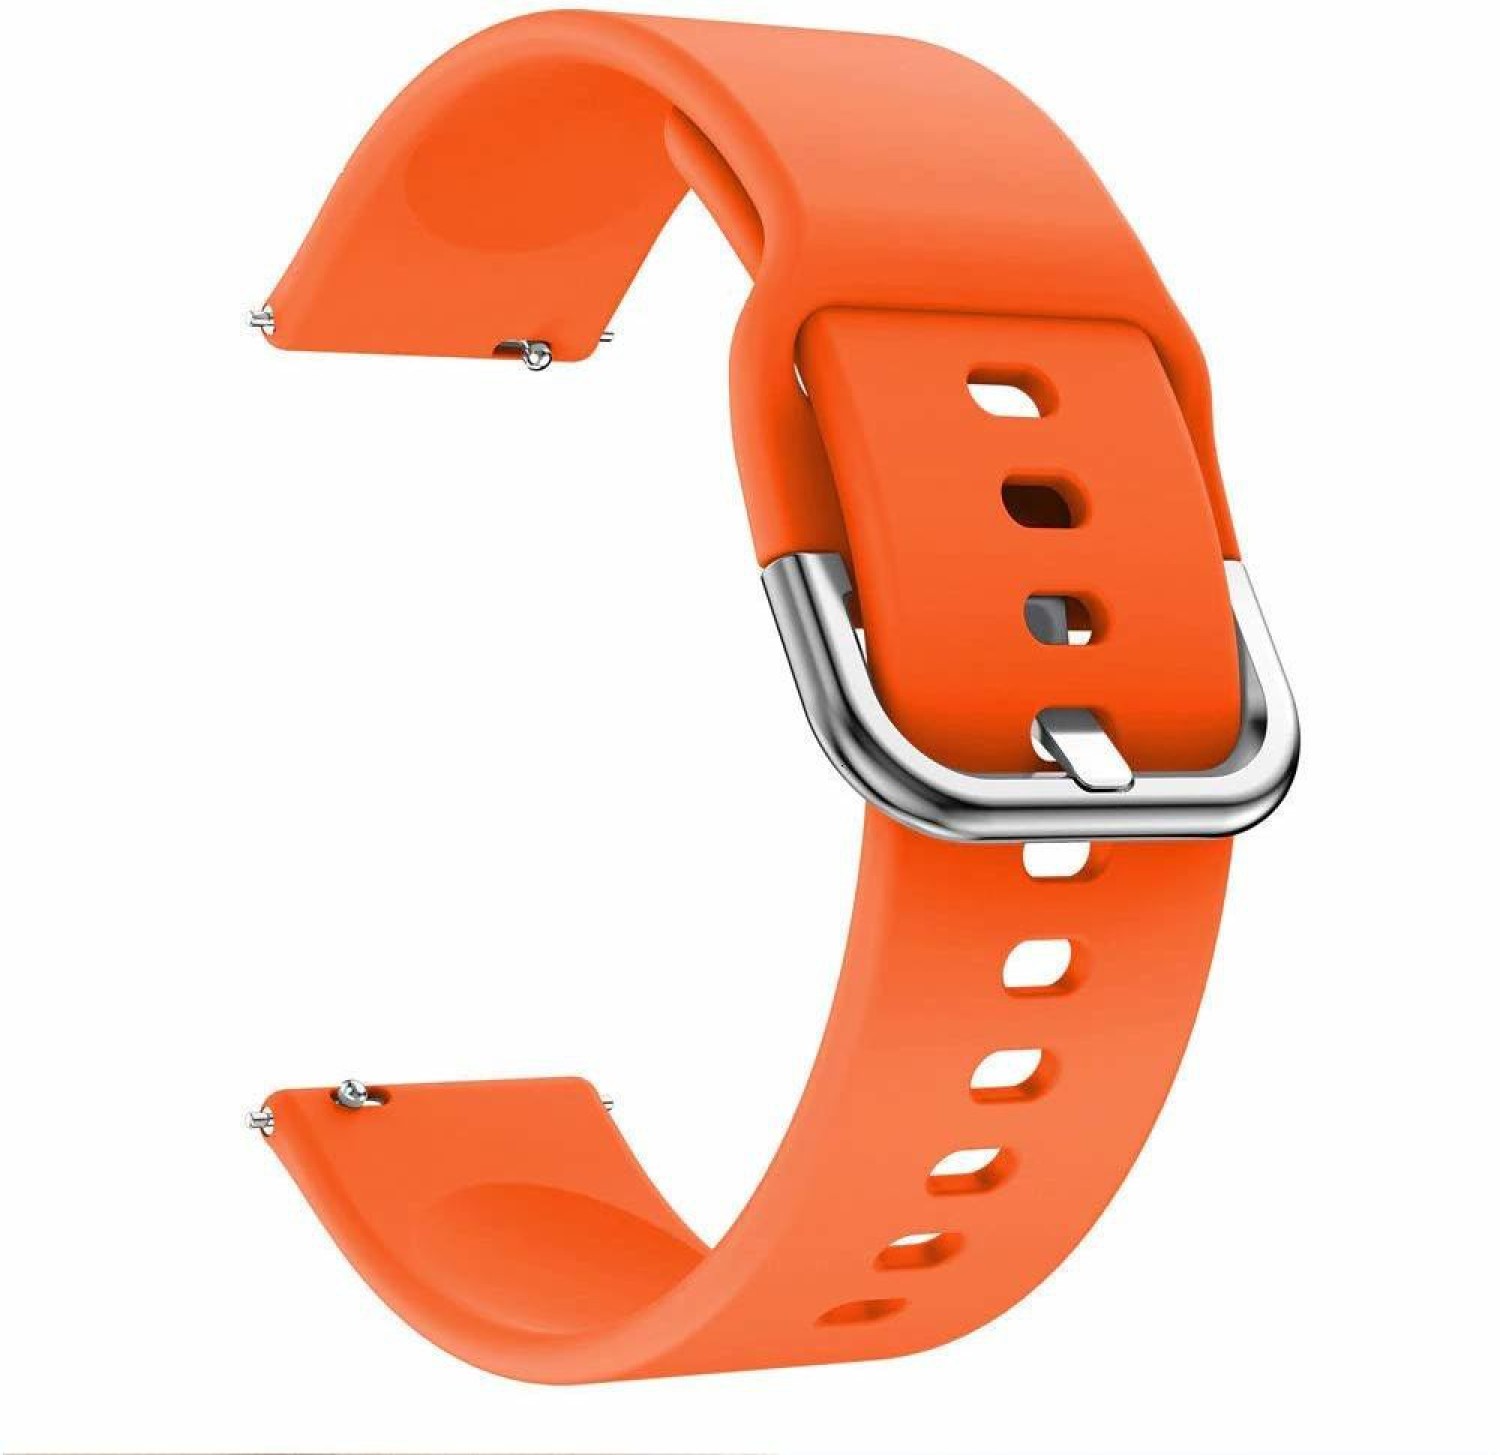 https://rukminim1.flixcart.com/image/1500/1500/kf8kvbk0/smart-watch-band-strap/c/e/z/20mm-silicon-huk-metal-orange-smart-watch-strap-casekoo-original-imafvq4s8cxgzgeg.jpeg?q=90